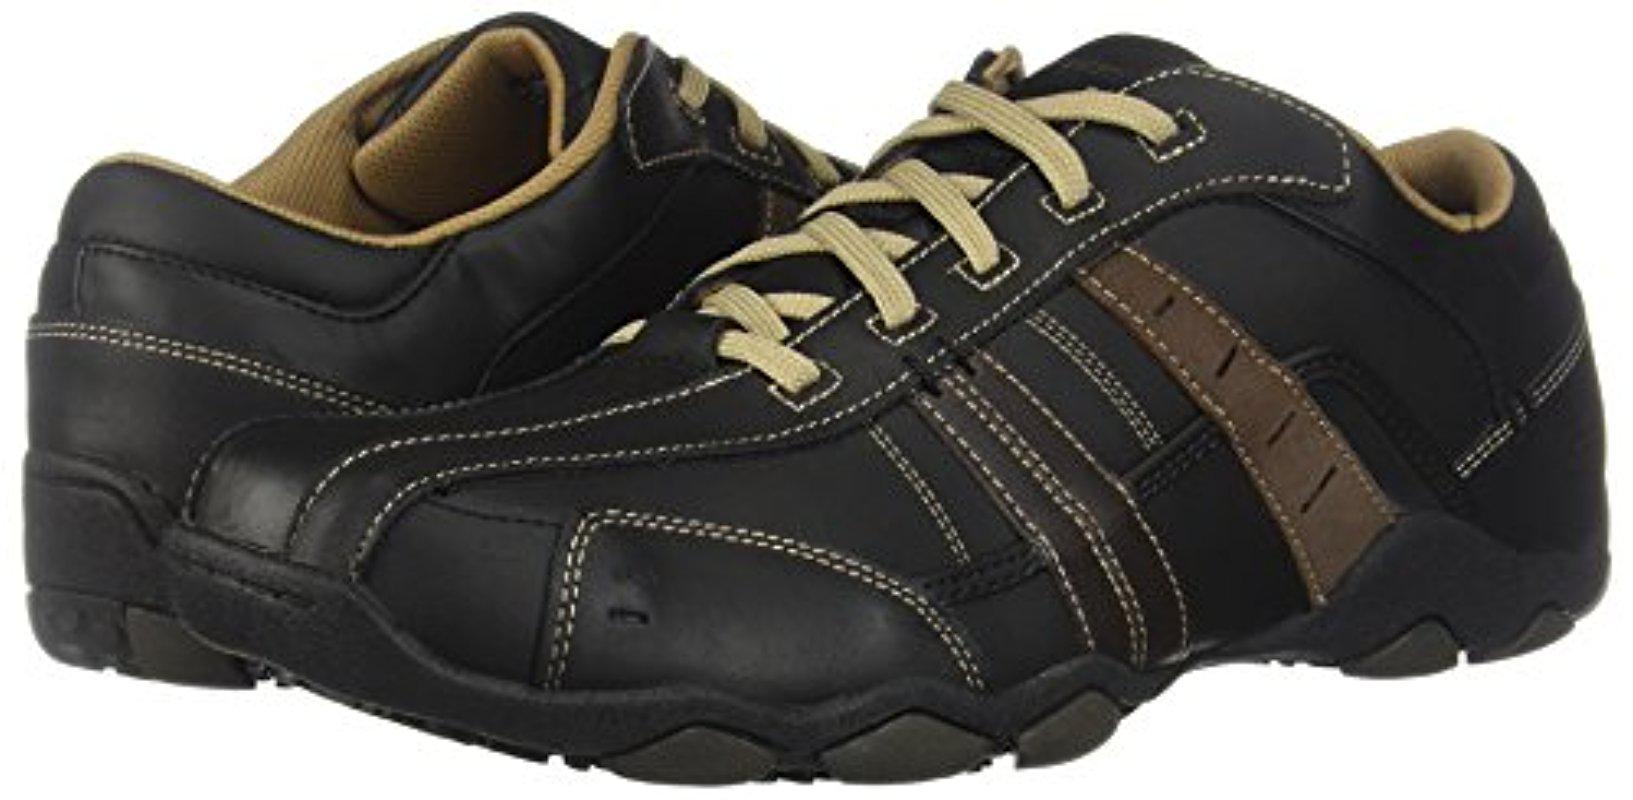 skechers men's vassell casual shoe black brown